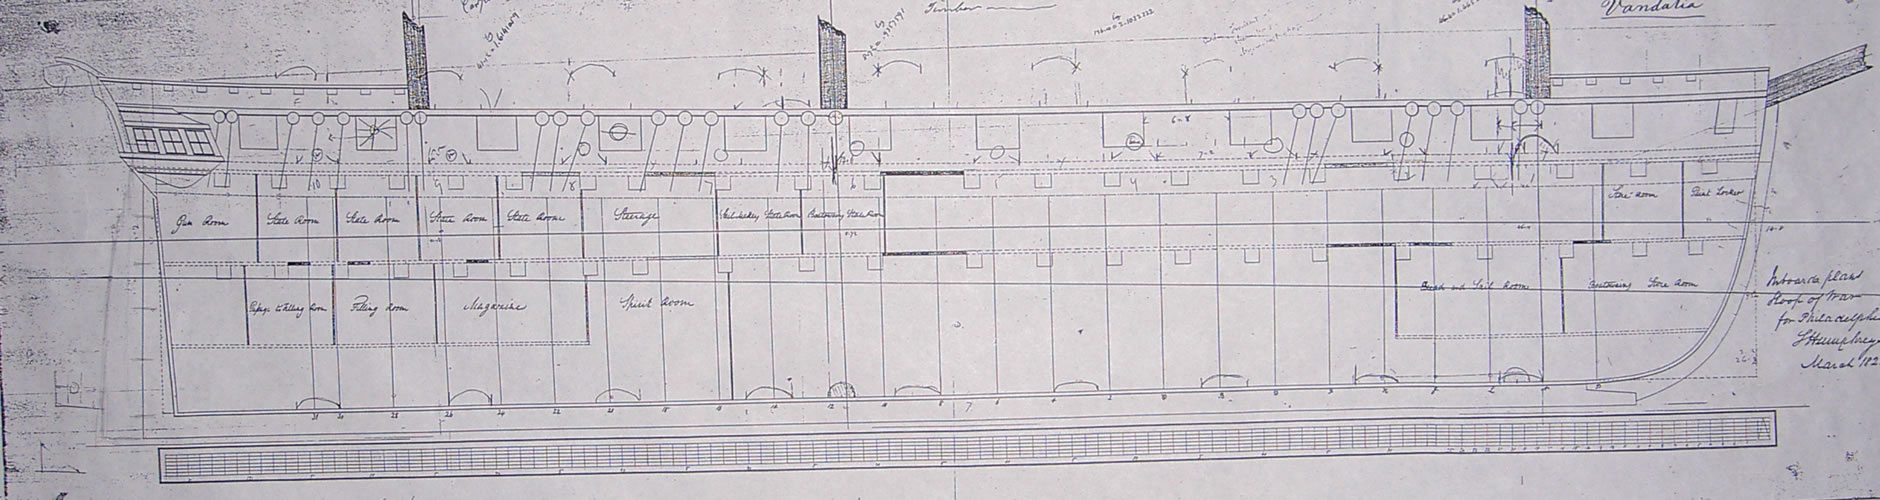 Inboard profile Plan of the Vandalia 1825